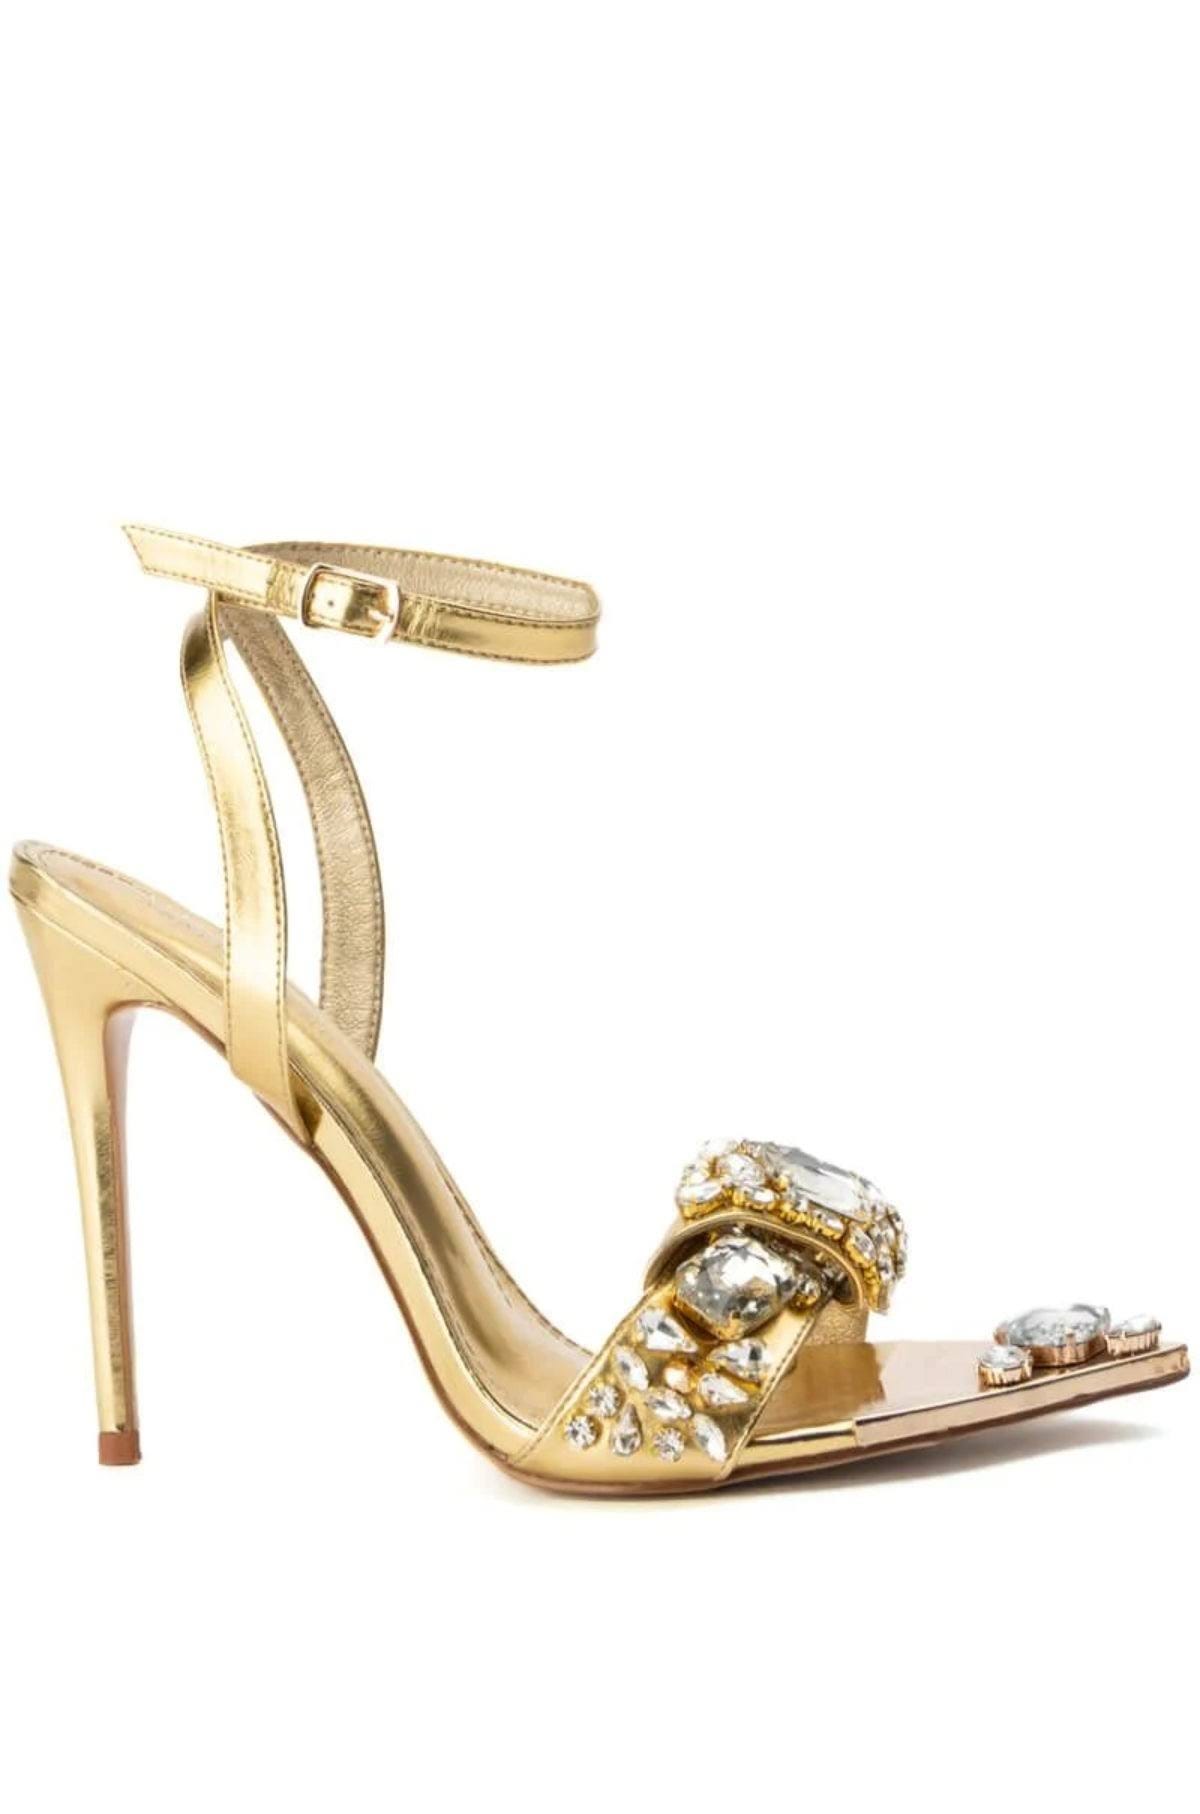 Gold Metallic Pointed Toe Stiletto Heels | Image